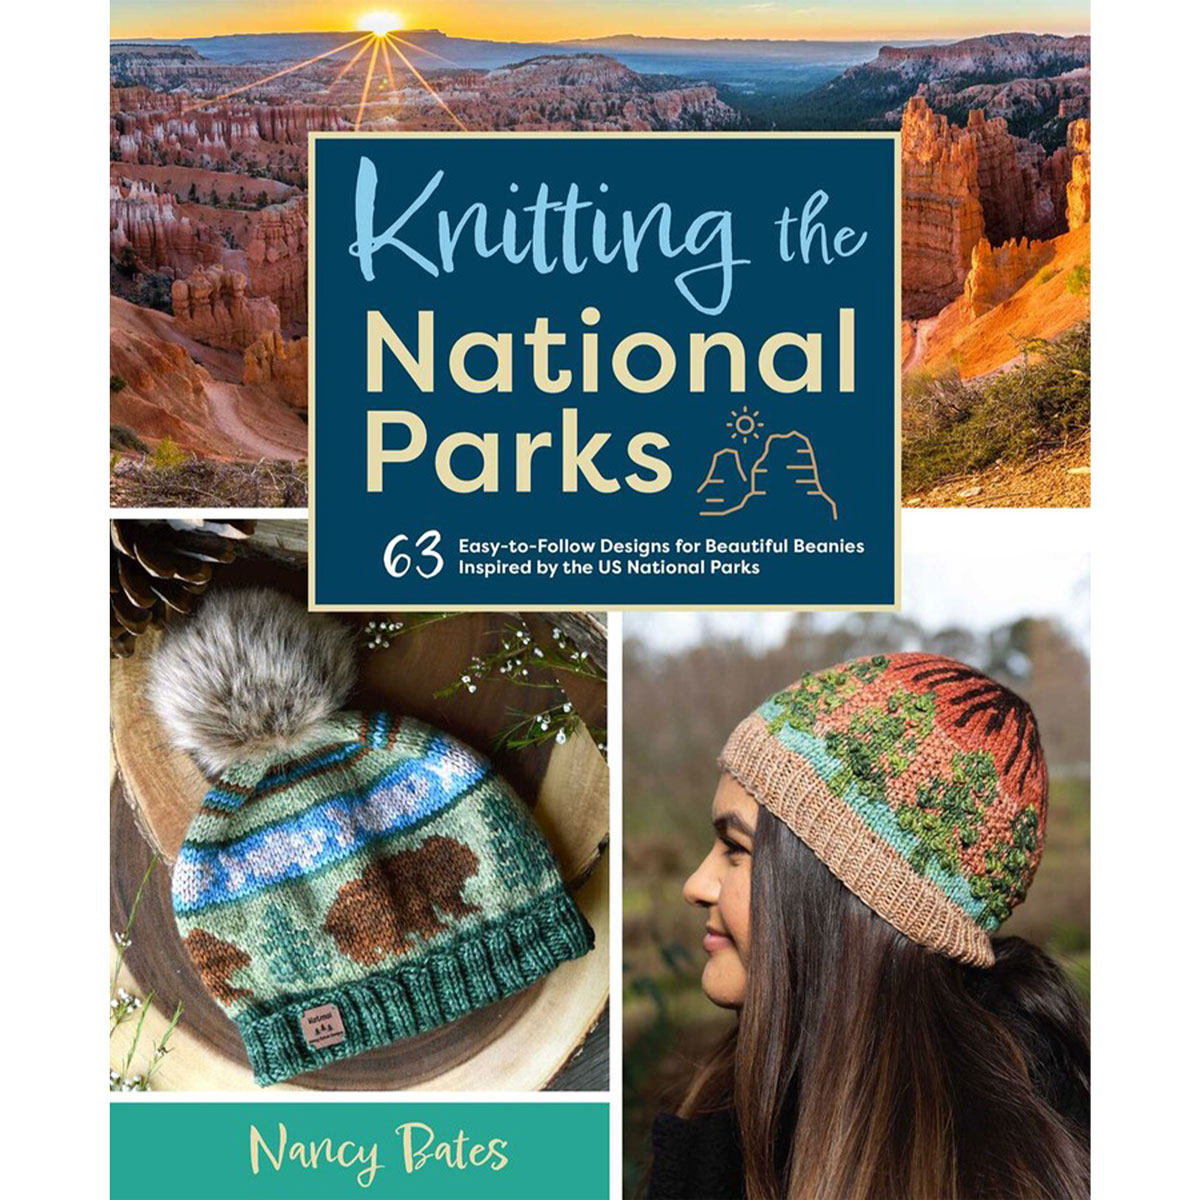  Knitting Supplies, Knitting Yarn, Books, Patterns